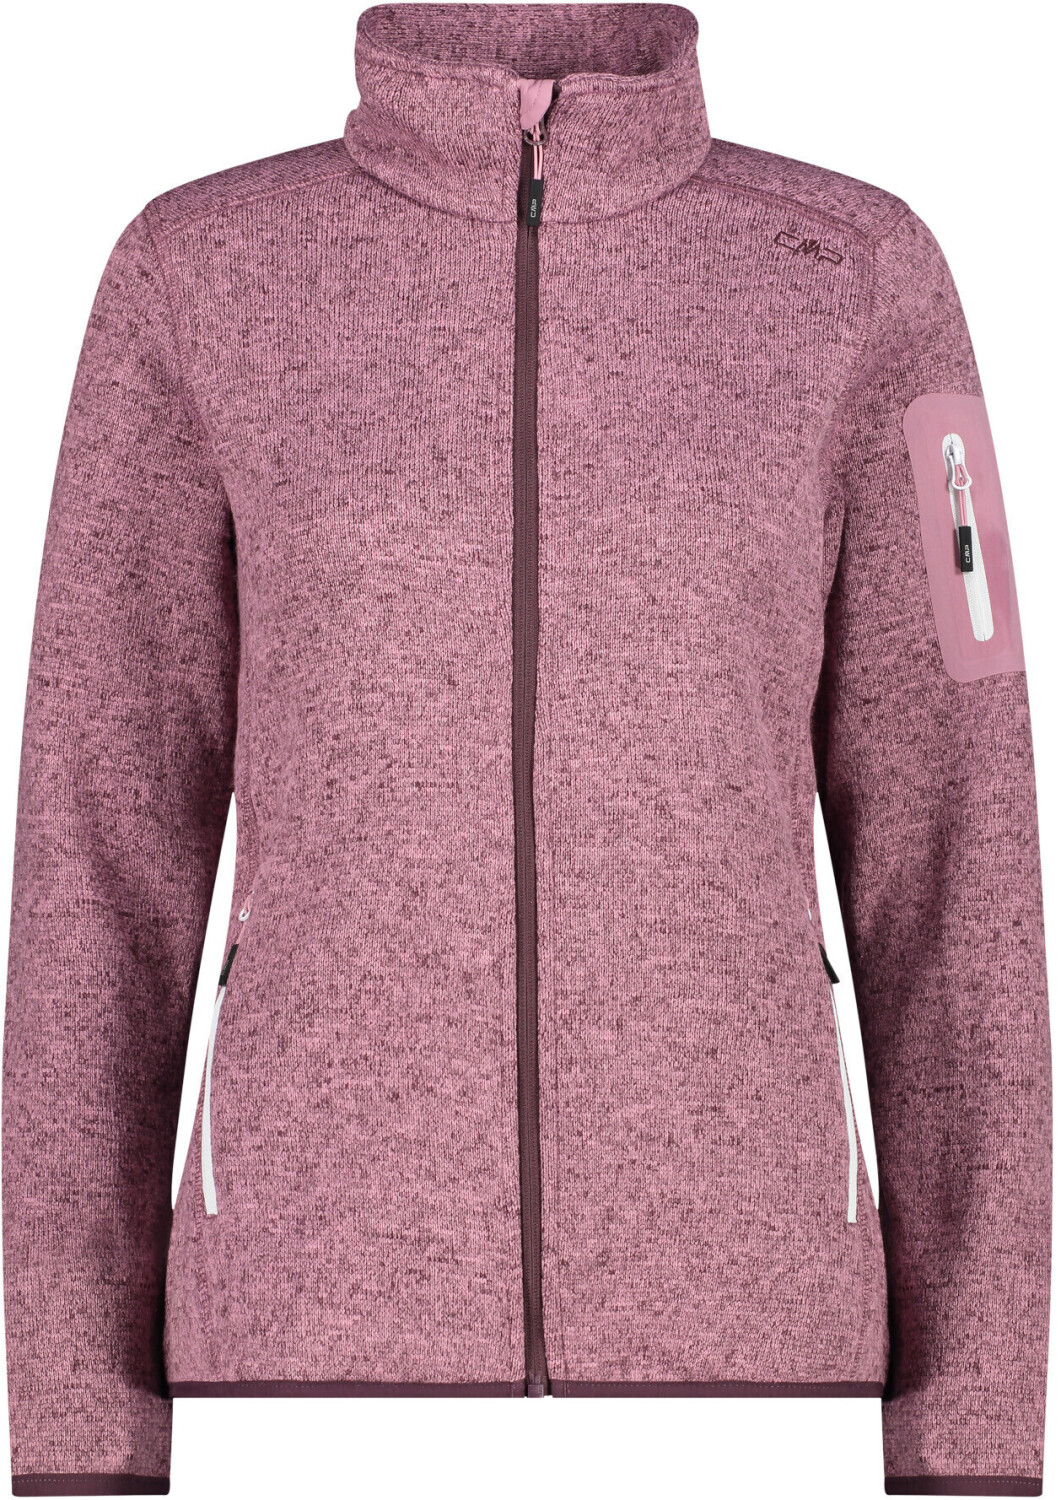 CMP Fleece Jacket Knit-Tech Melange € | Preisvergleich fard-plum (3H14746) ab bei 34,95